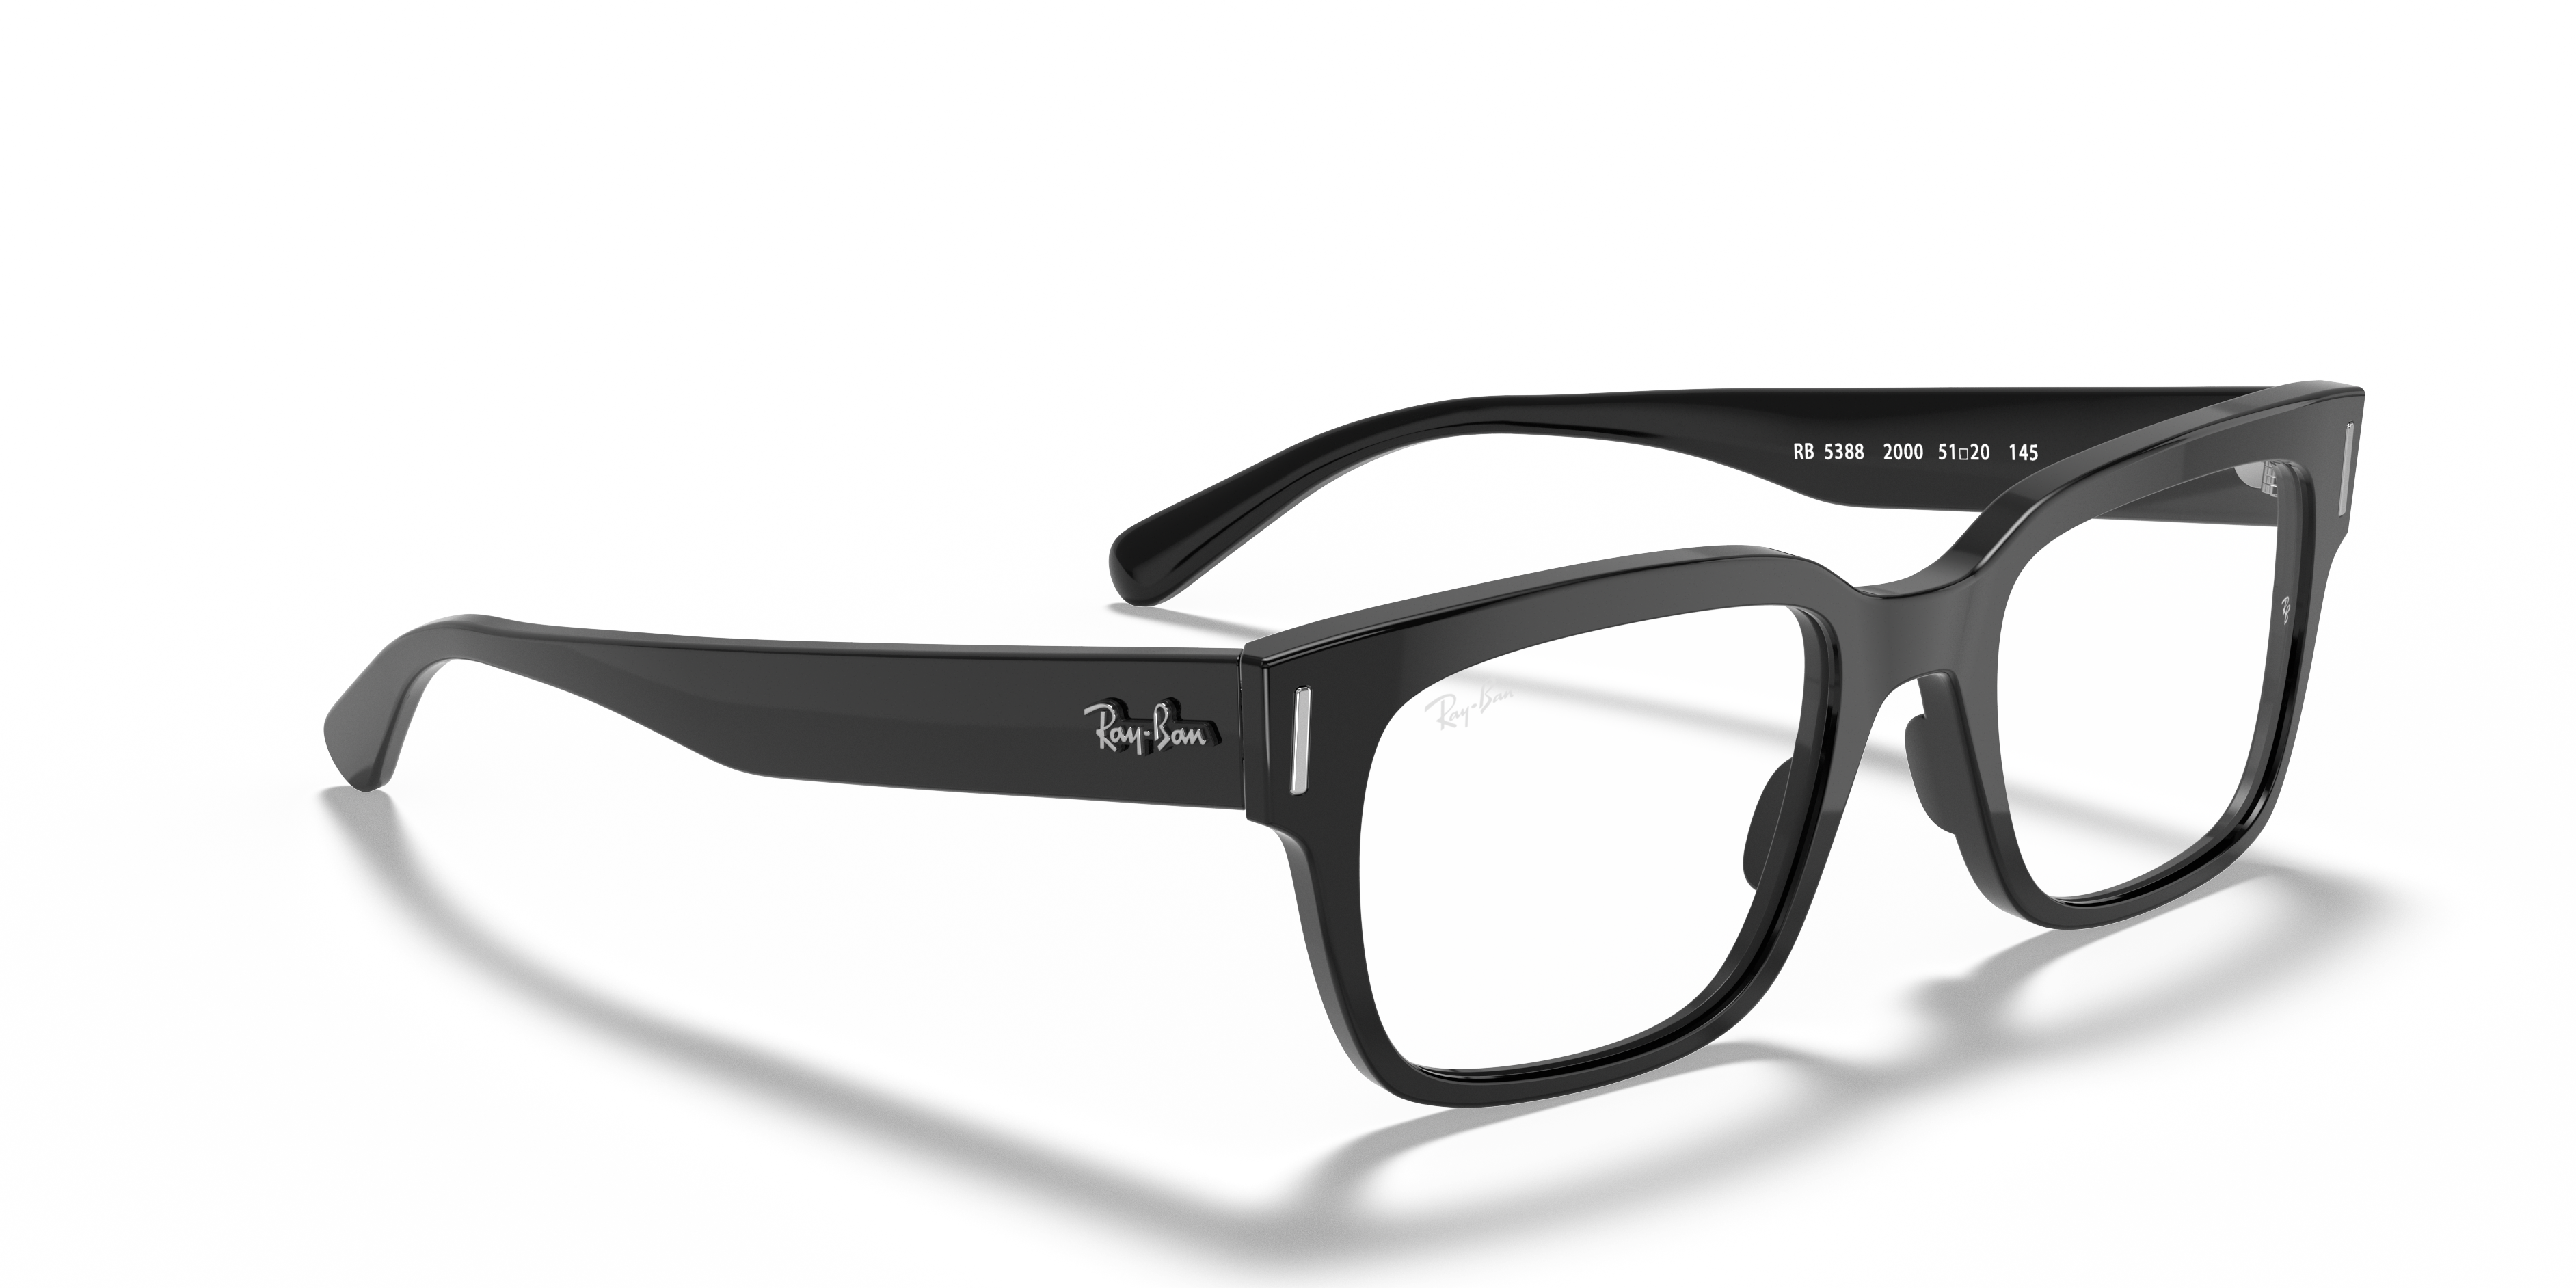 Jeffrey Optics Eyeglasses with Black Frame | Ray-Ban®